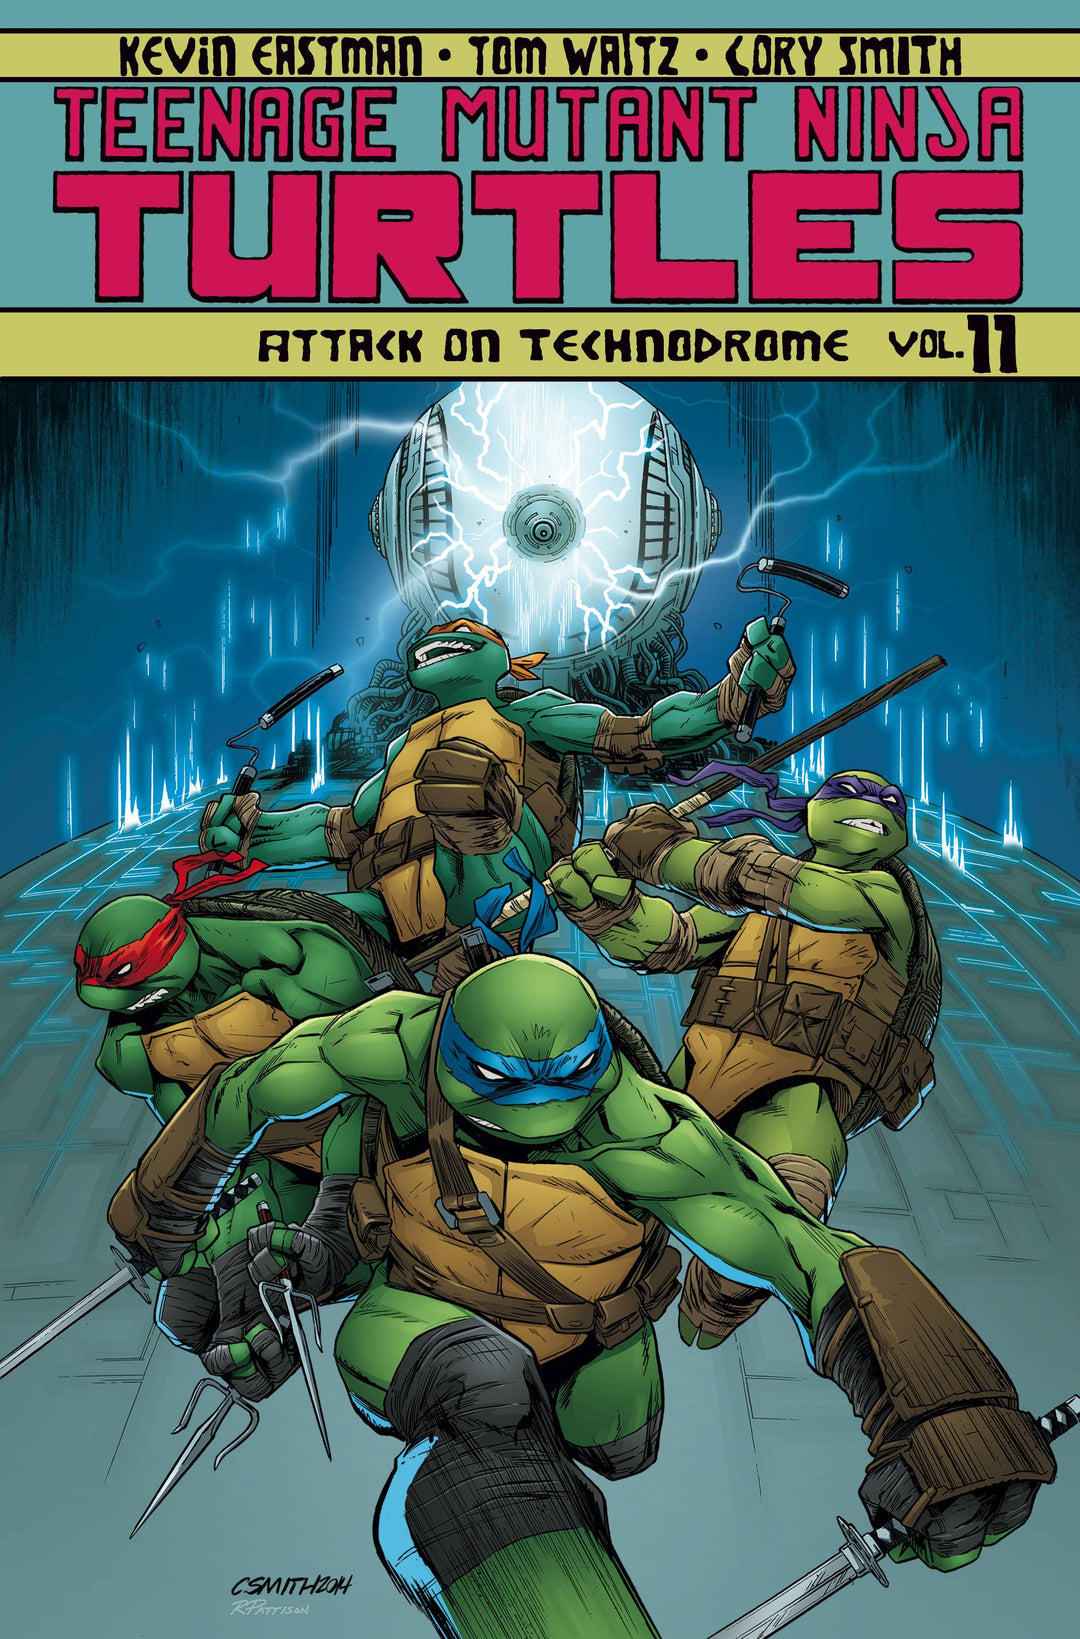 Teenage Mutant Ninja Turtles Ongoing TP VOL 11 Attack On Technodrome